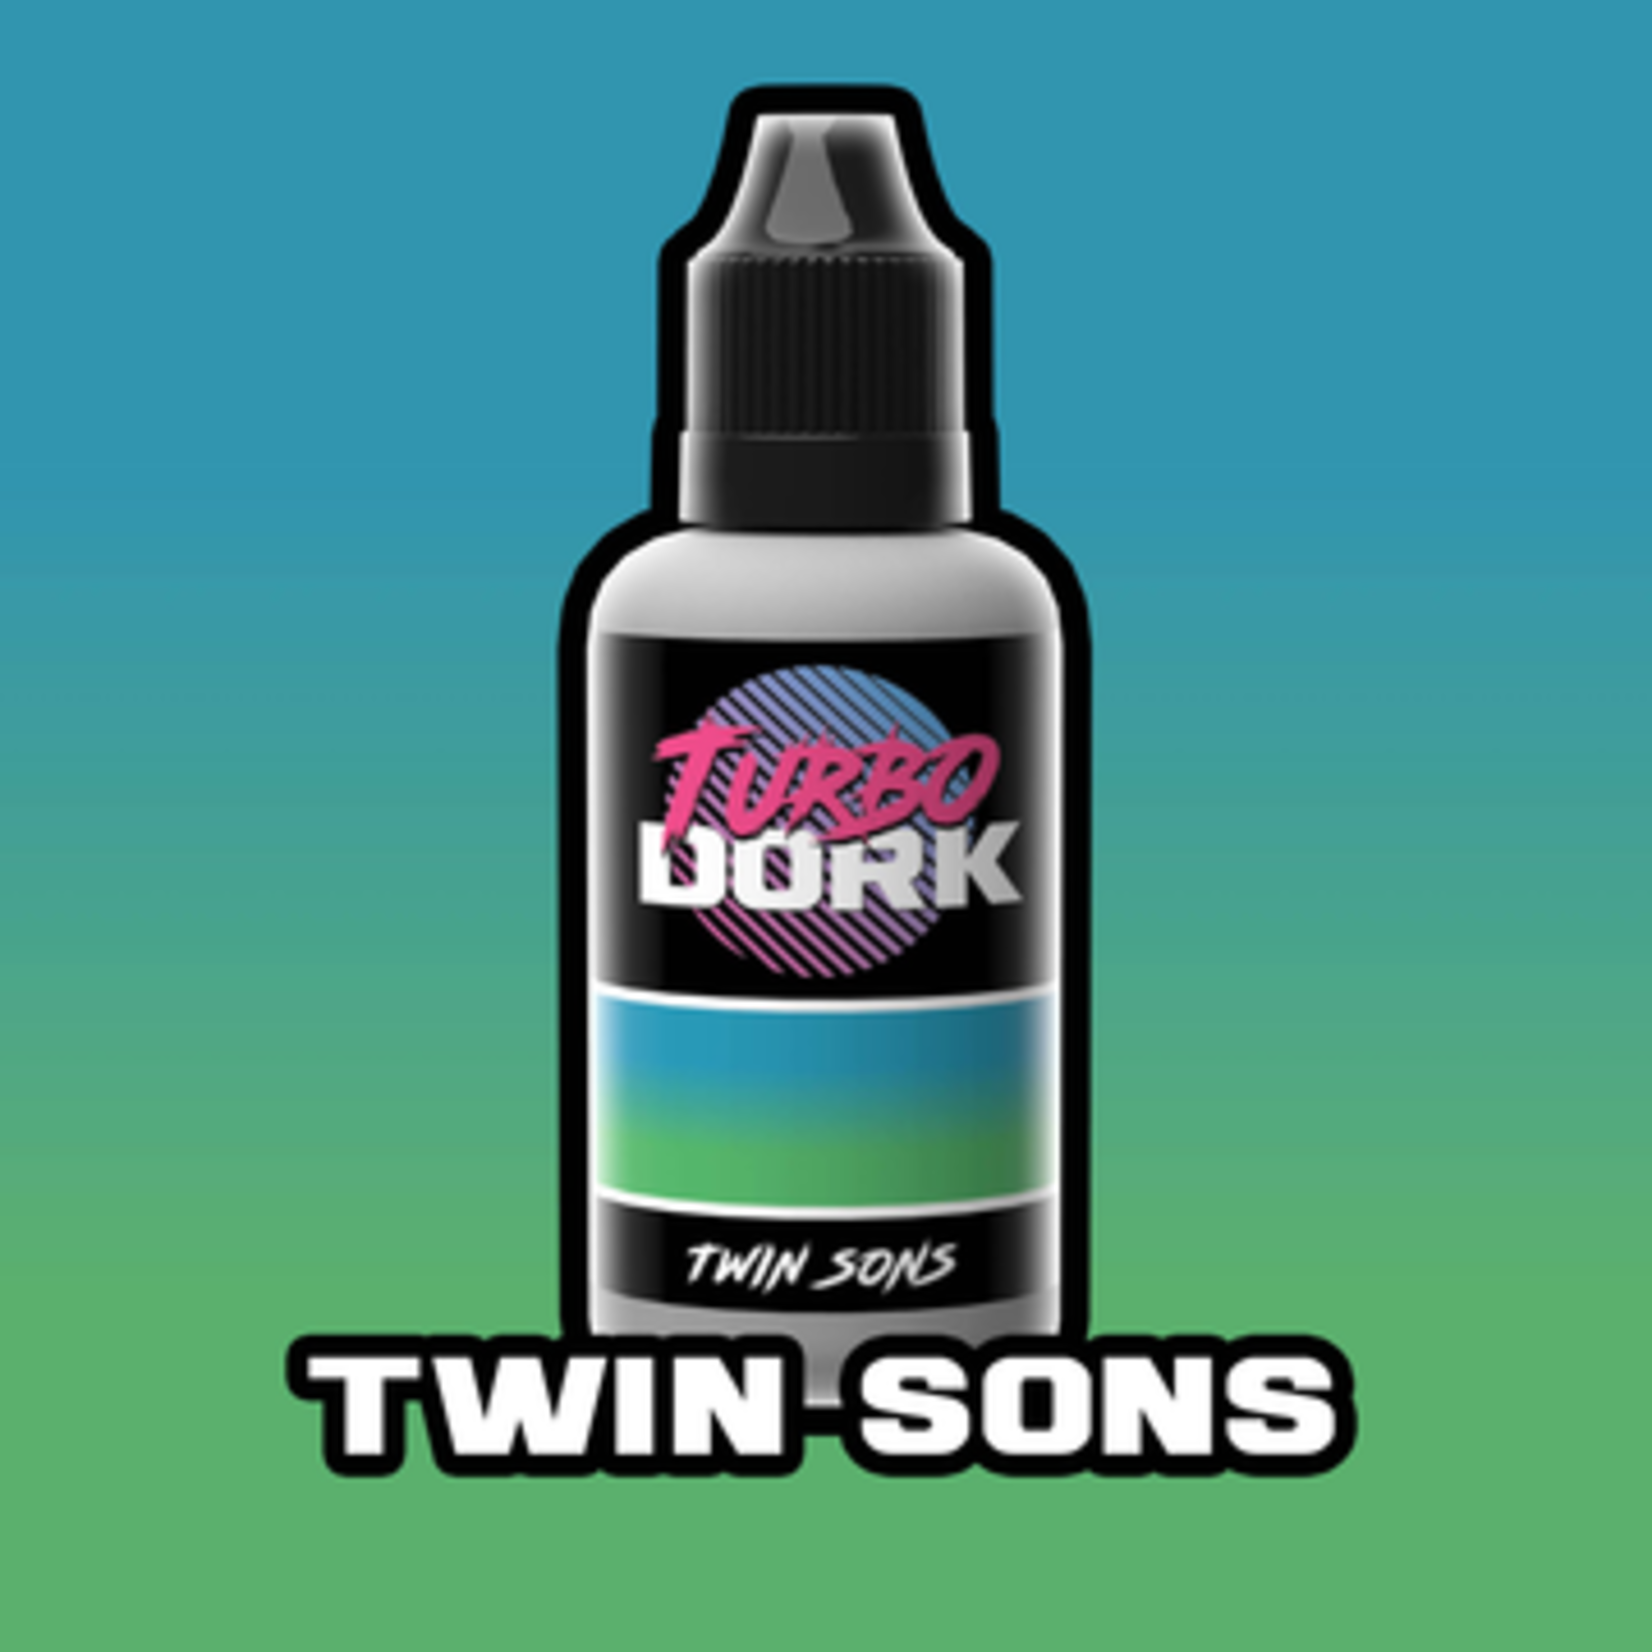 Turbo Dork Turbo Dork Twin Sons Turboshift Acrylic Paint 20ml